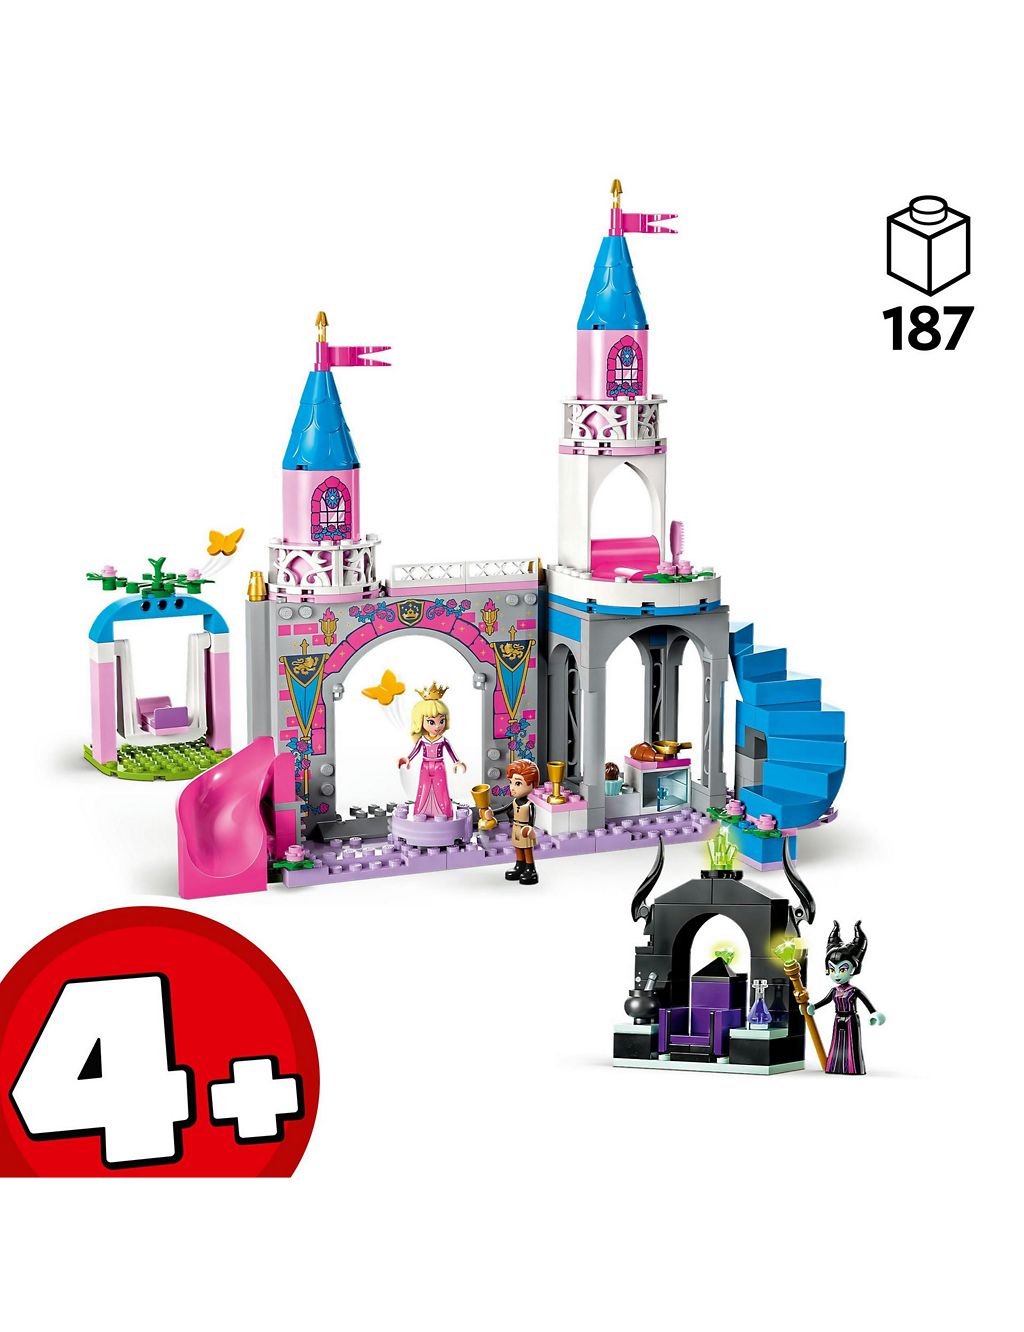 LEGO|Disney Princess Aurora's Castle Set 43211 (4+ Yrs) 1 of 7